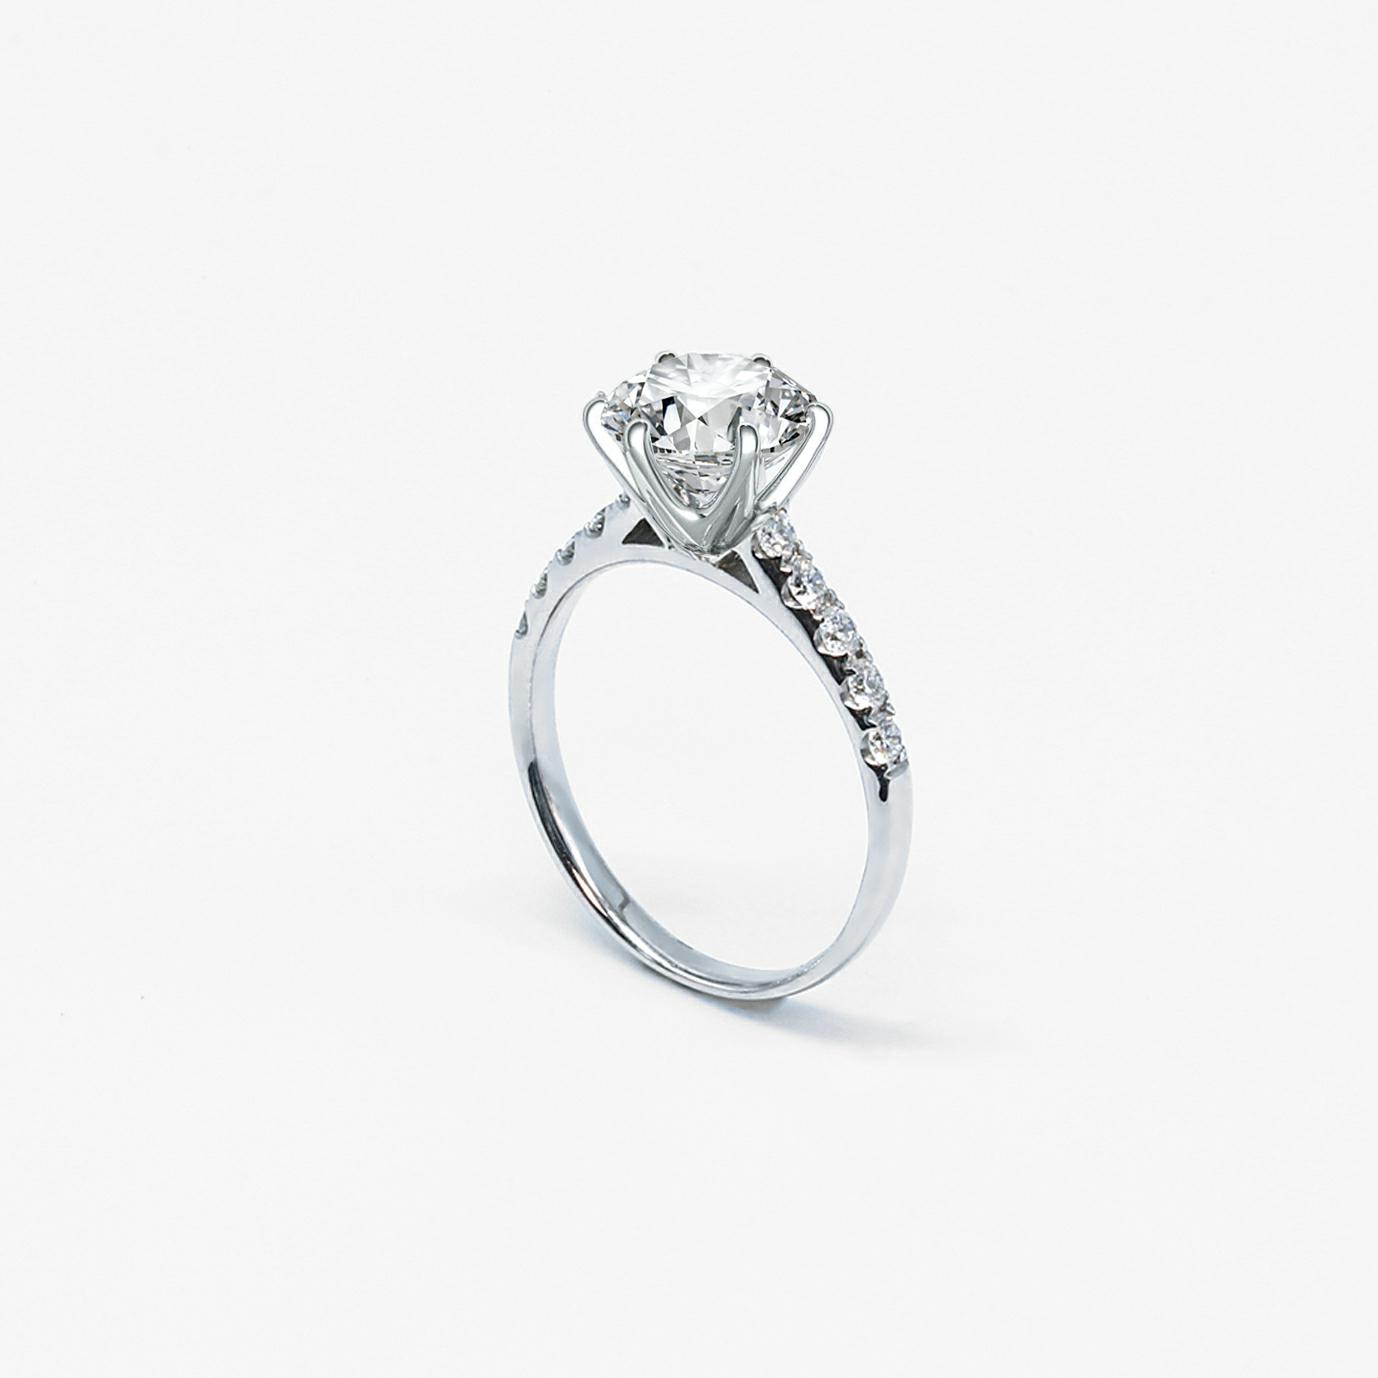 Black Diamond Engagement Ring Set Rose Gold, 2 Carat Diamond Wedding Ring  Sets, Halo Pave Unique Certified Handmade